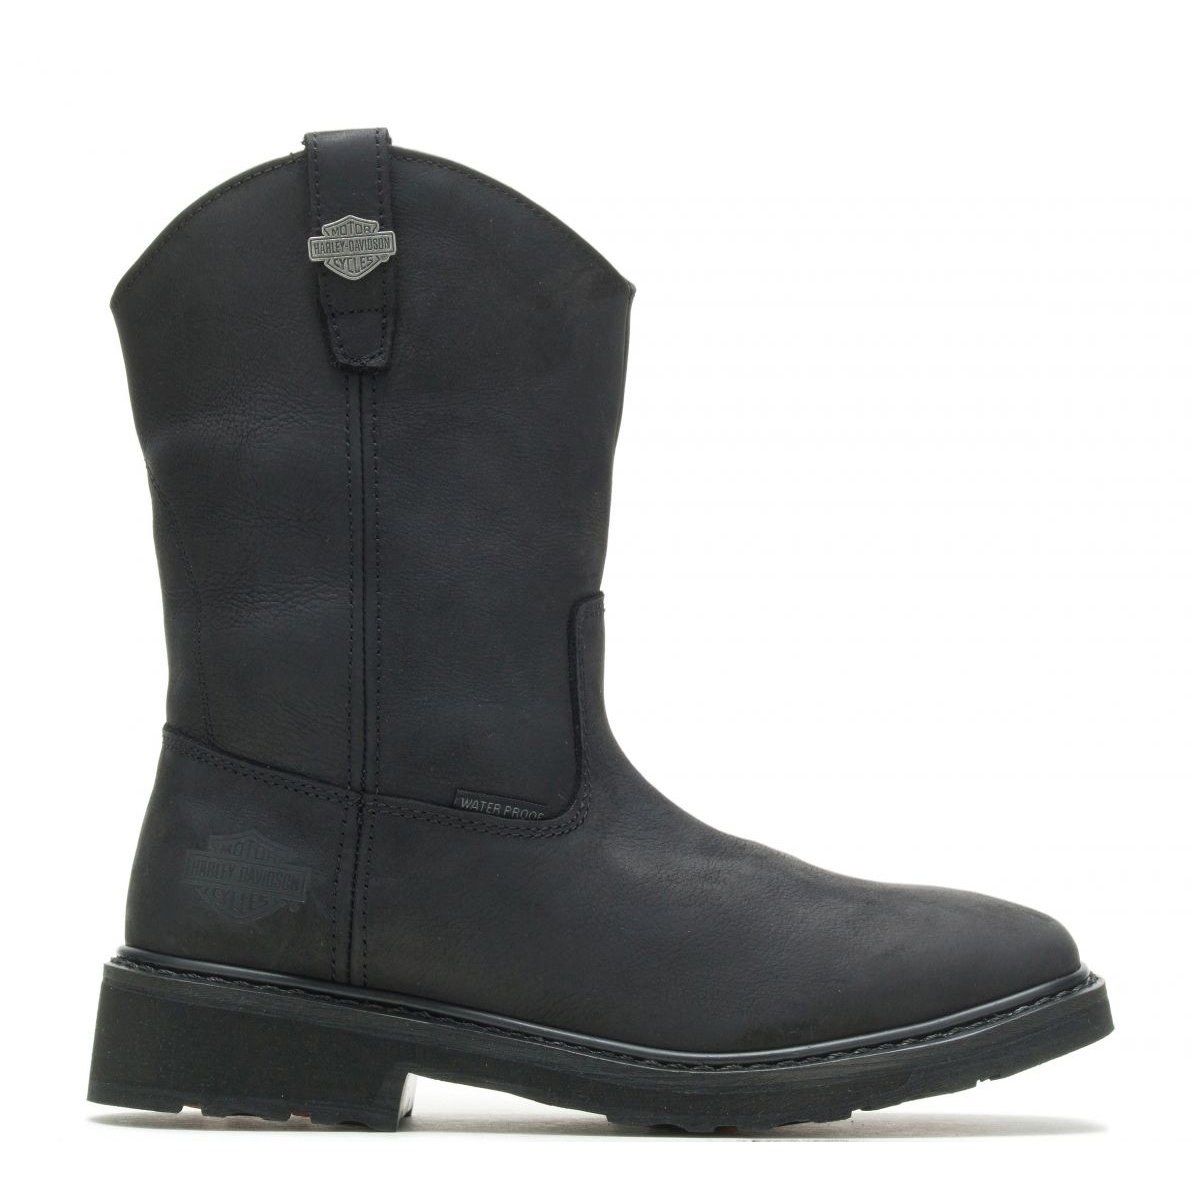 HARLEY-DAVIDSON WORK Men's Altman Western Classic Soft Toe Work Boot Black - D93561 Black/black - Black/black, 8 M US